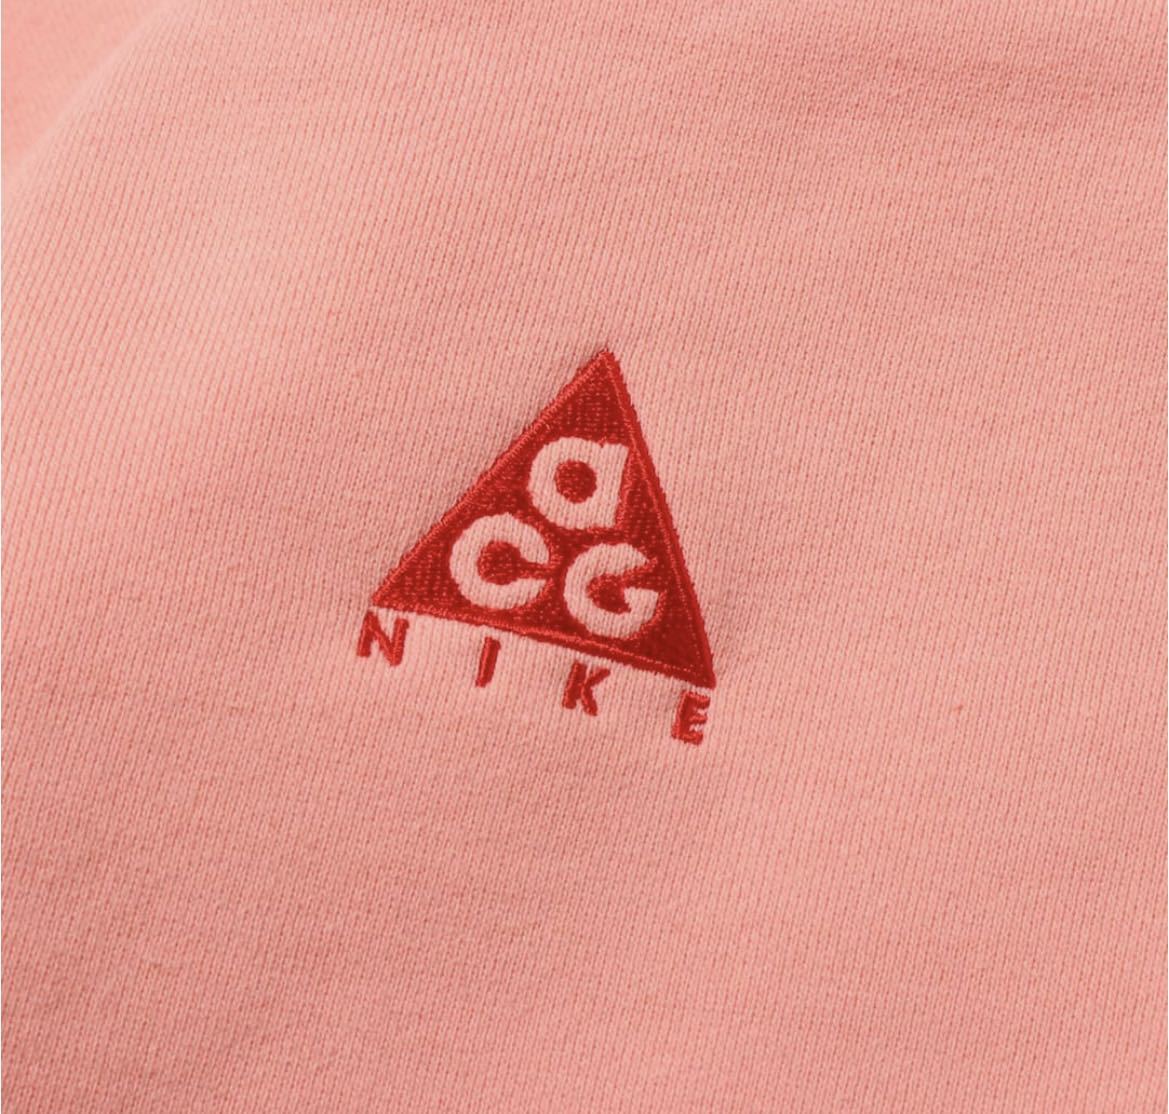  новый товар L размер Nike laboACG тянуть надкрылок -ti Parker розовый 